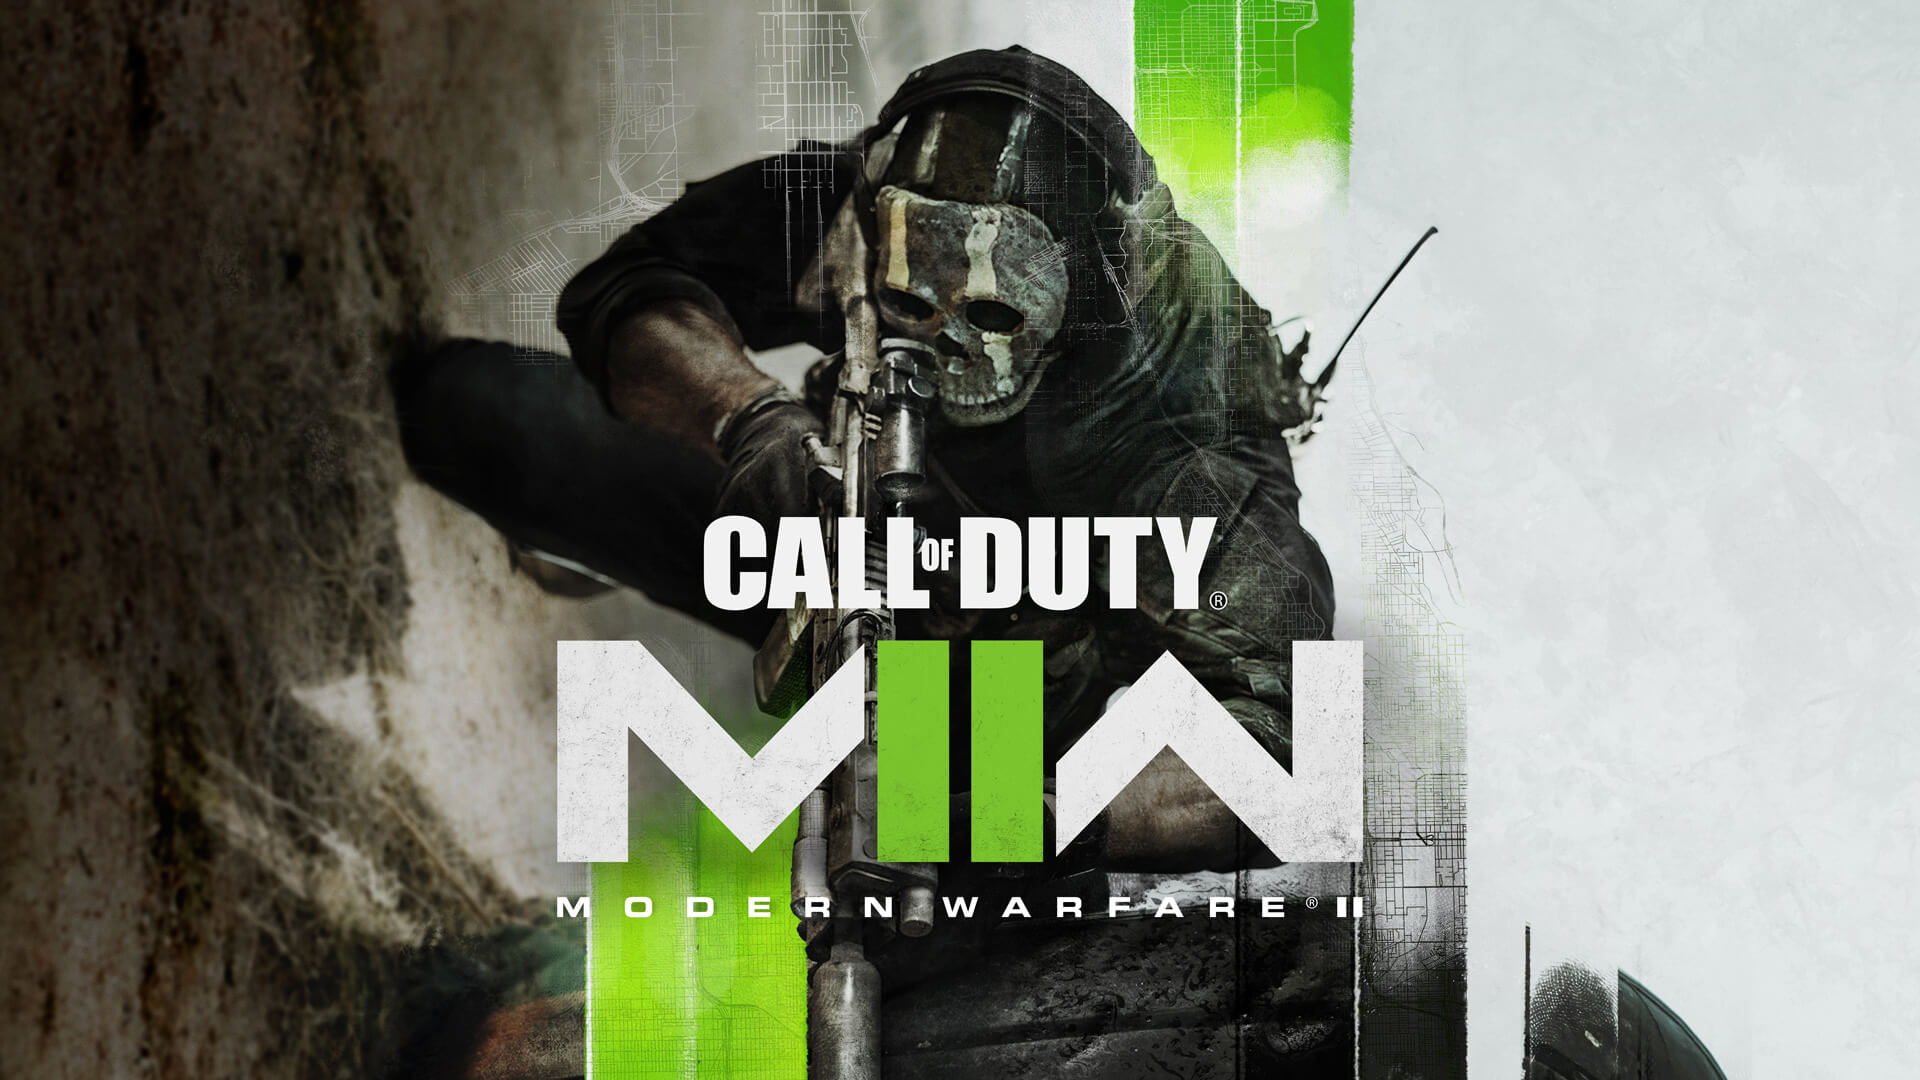 Descubra por que vale a pena jogar Call of Duty: MW II